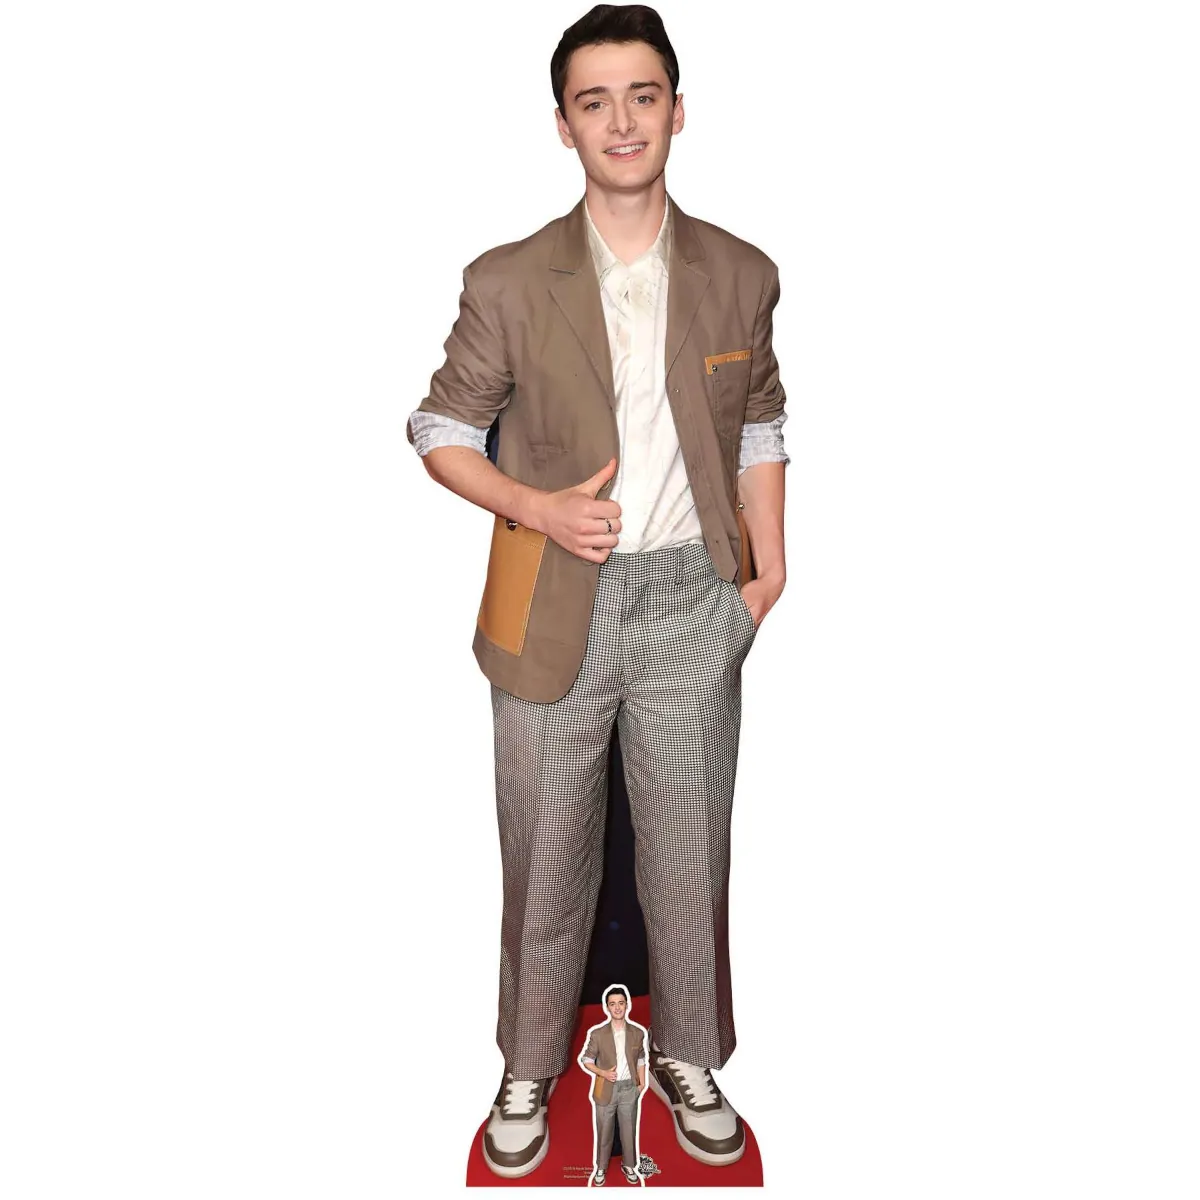 CS1018 Noah Schnapp 'Brown Jacket' (American Actor) Lifesize + Mini Cardboard Cutout Standee Front